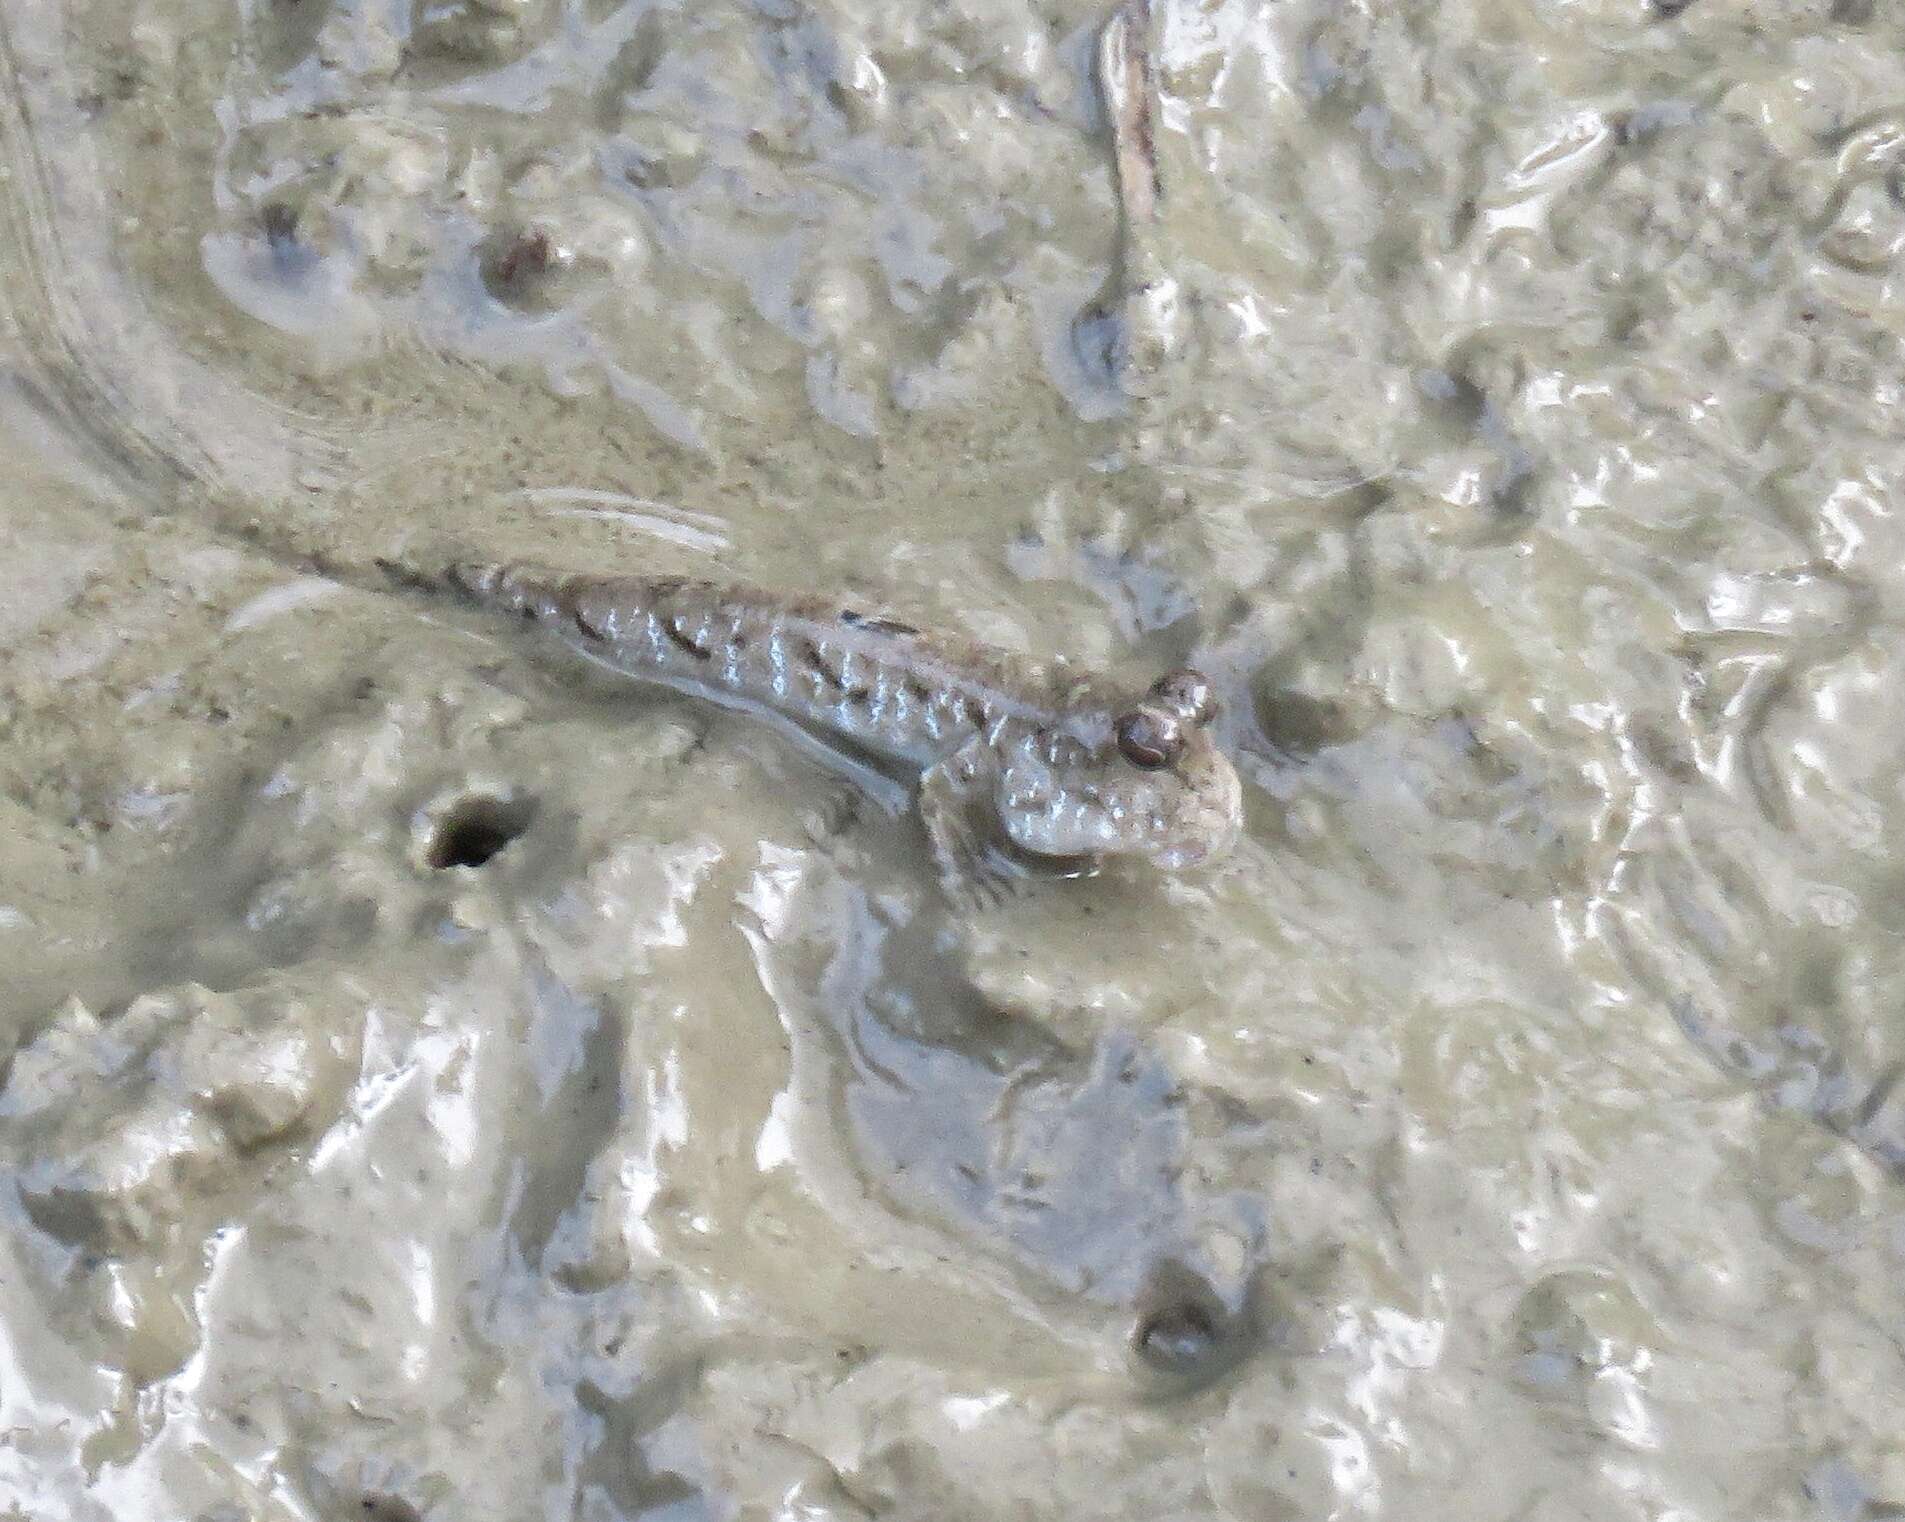 Image of Slender mudskipper